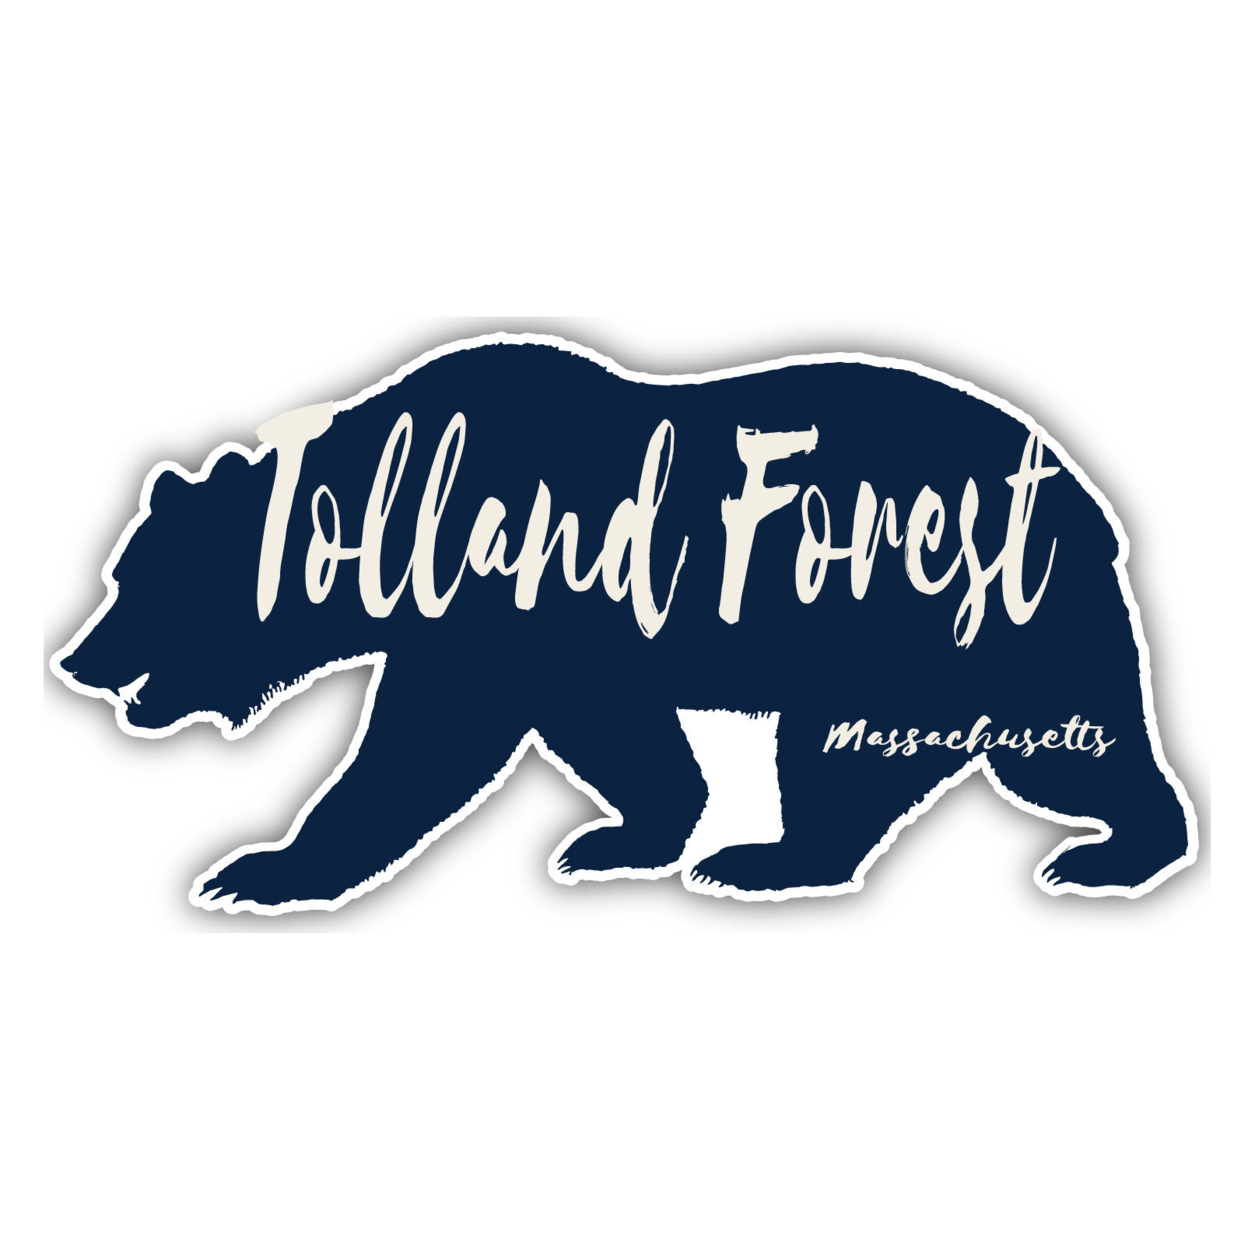 Tolland Forest Massachusetts Souvenir Decorative Stickers (Choose Theme And Size) - Single Unit, 4-Inch, Bear